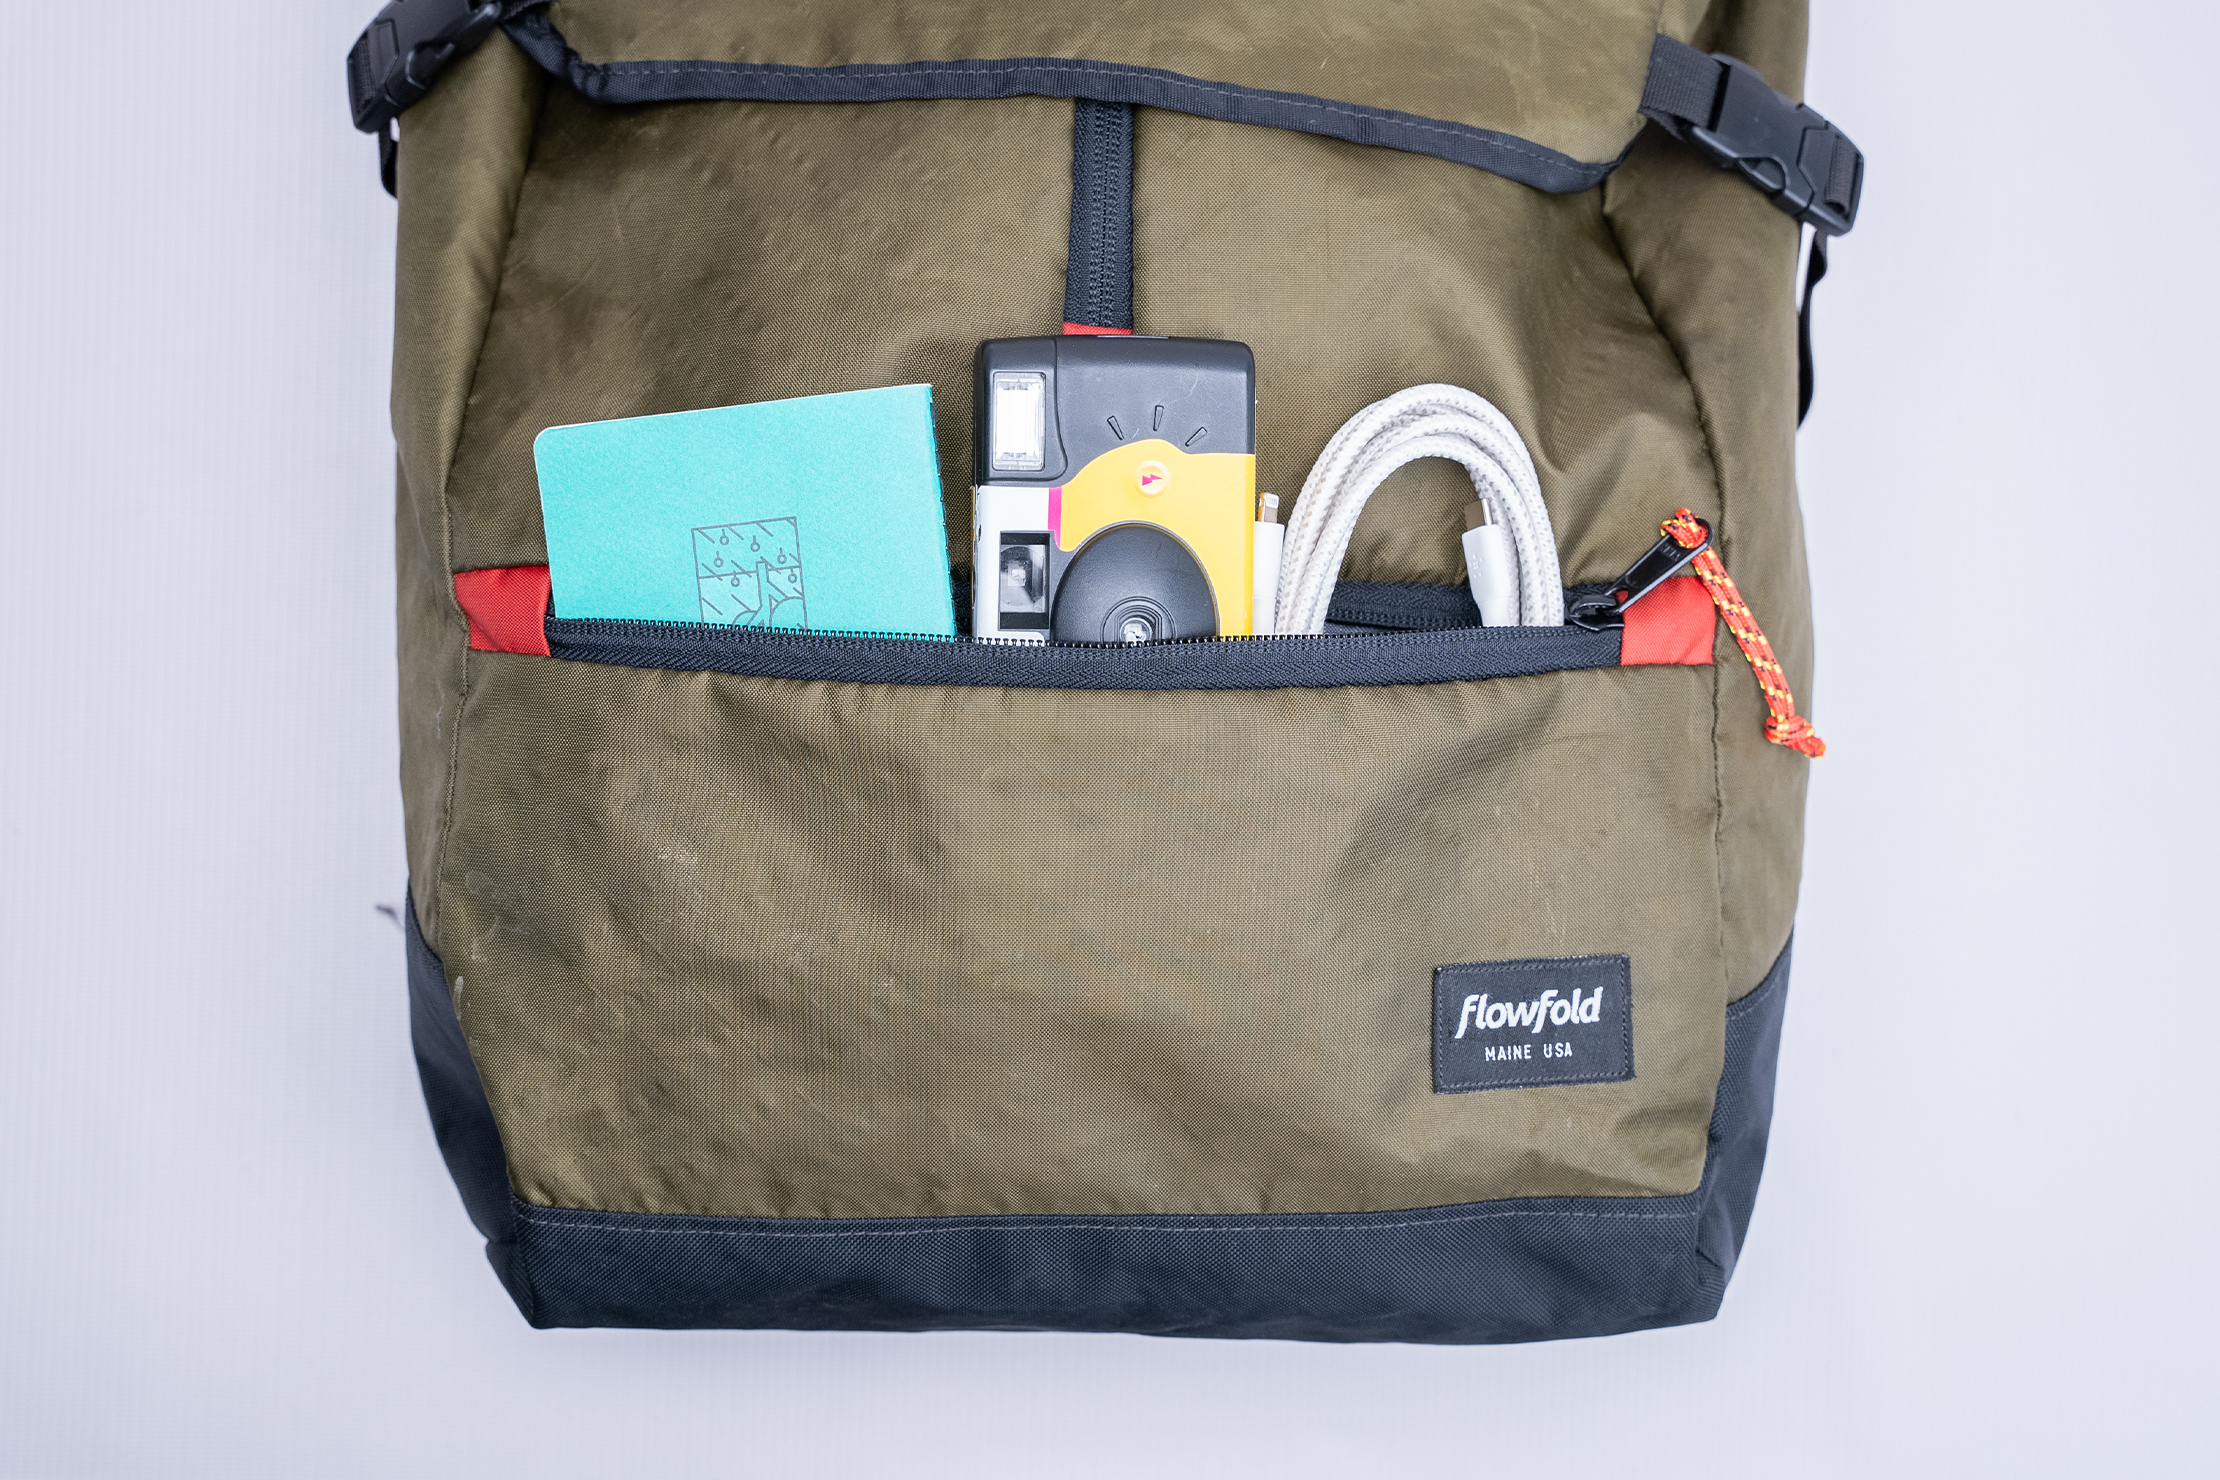 Flowfold Commuter- Center Zip Backpack Pocket